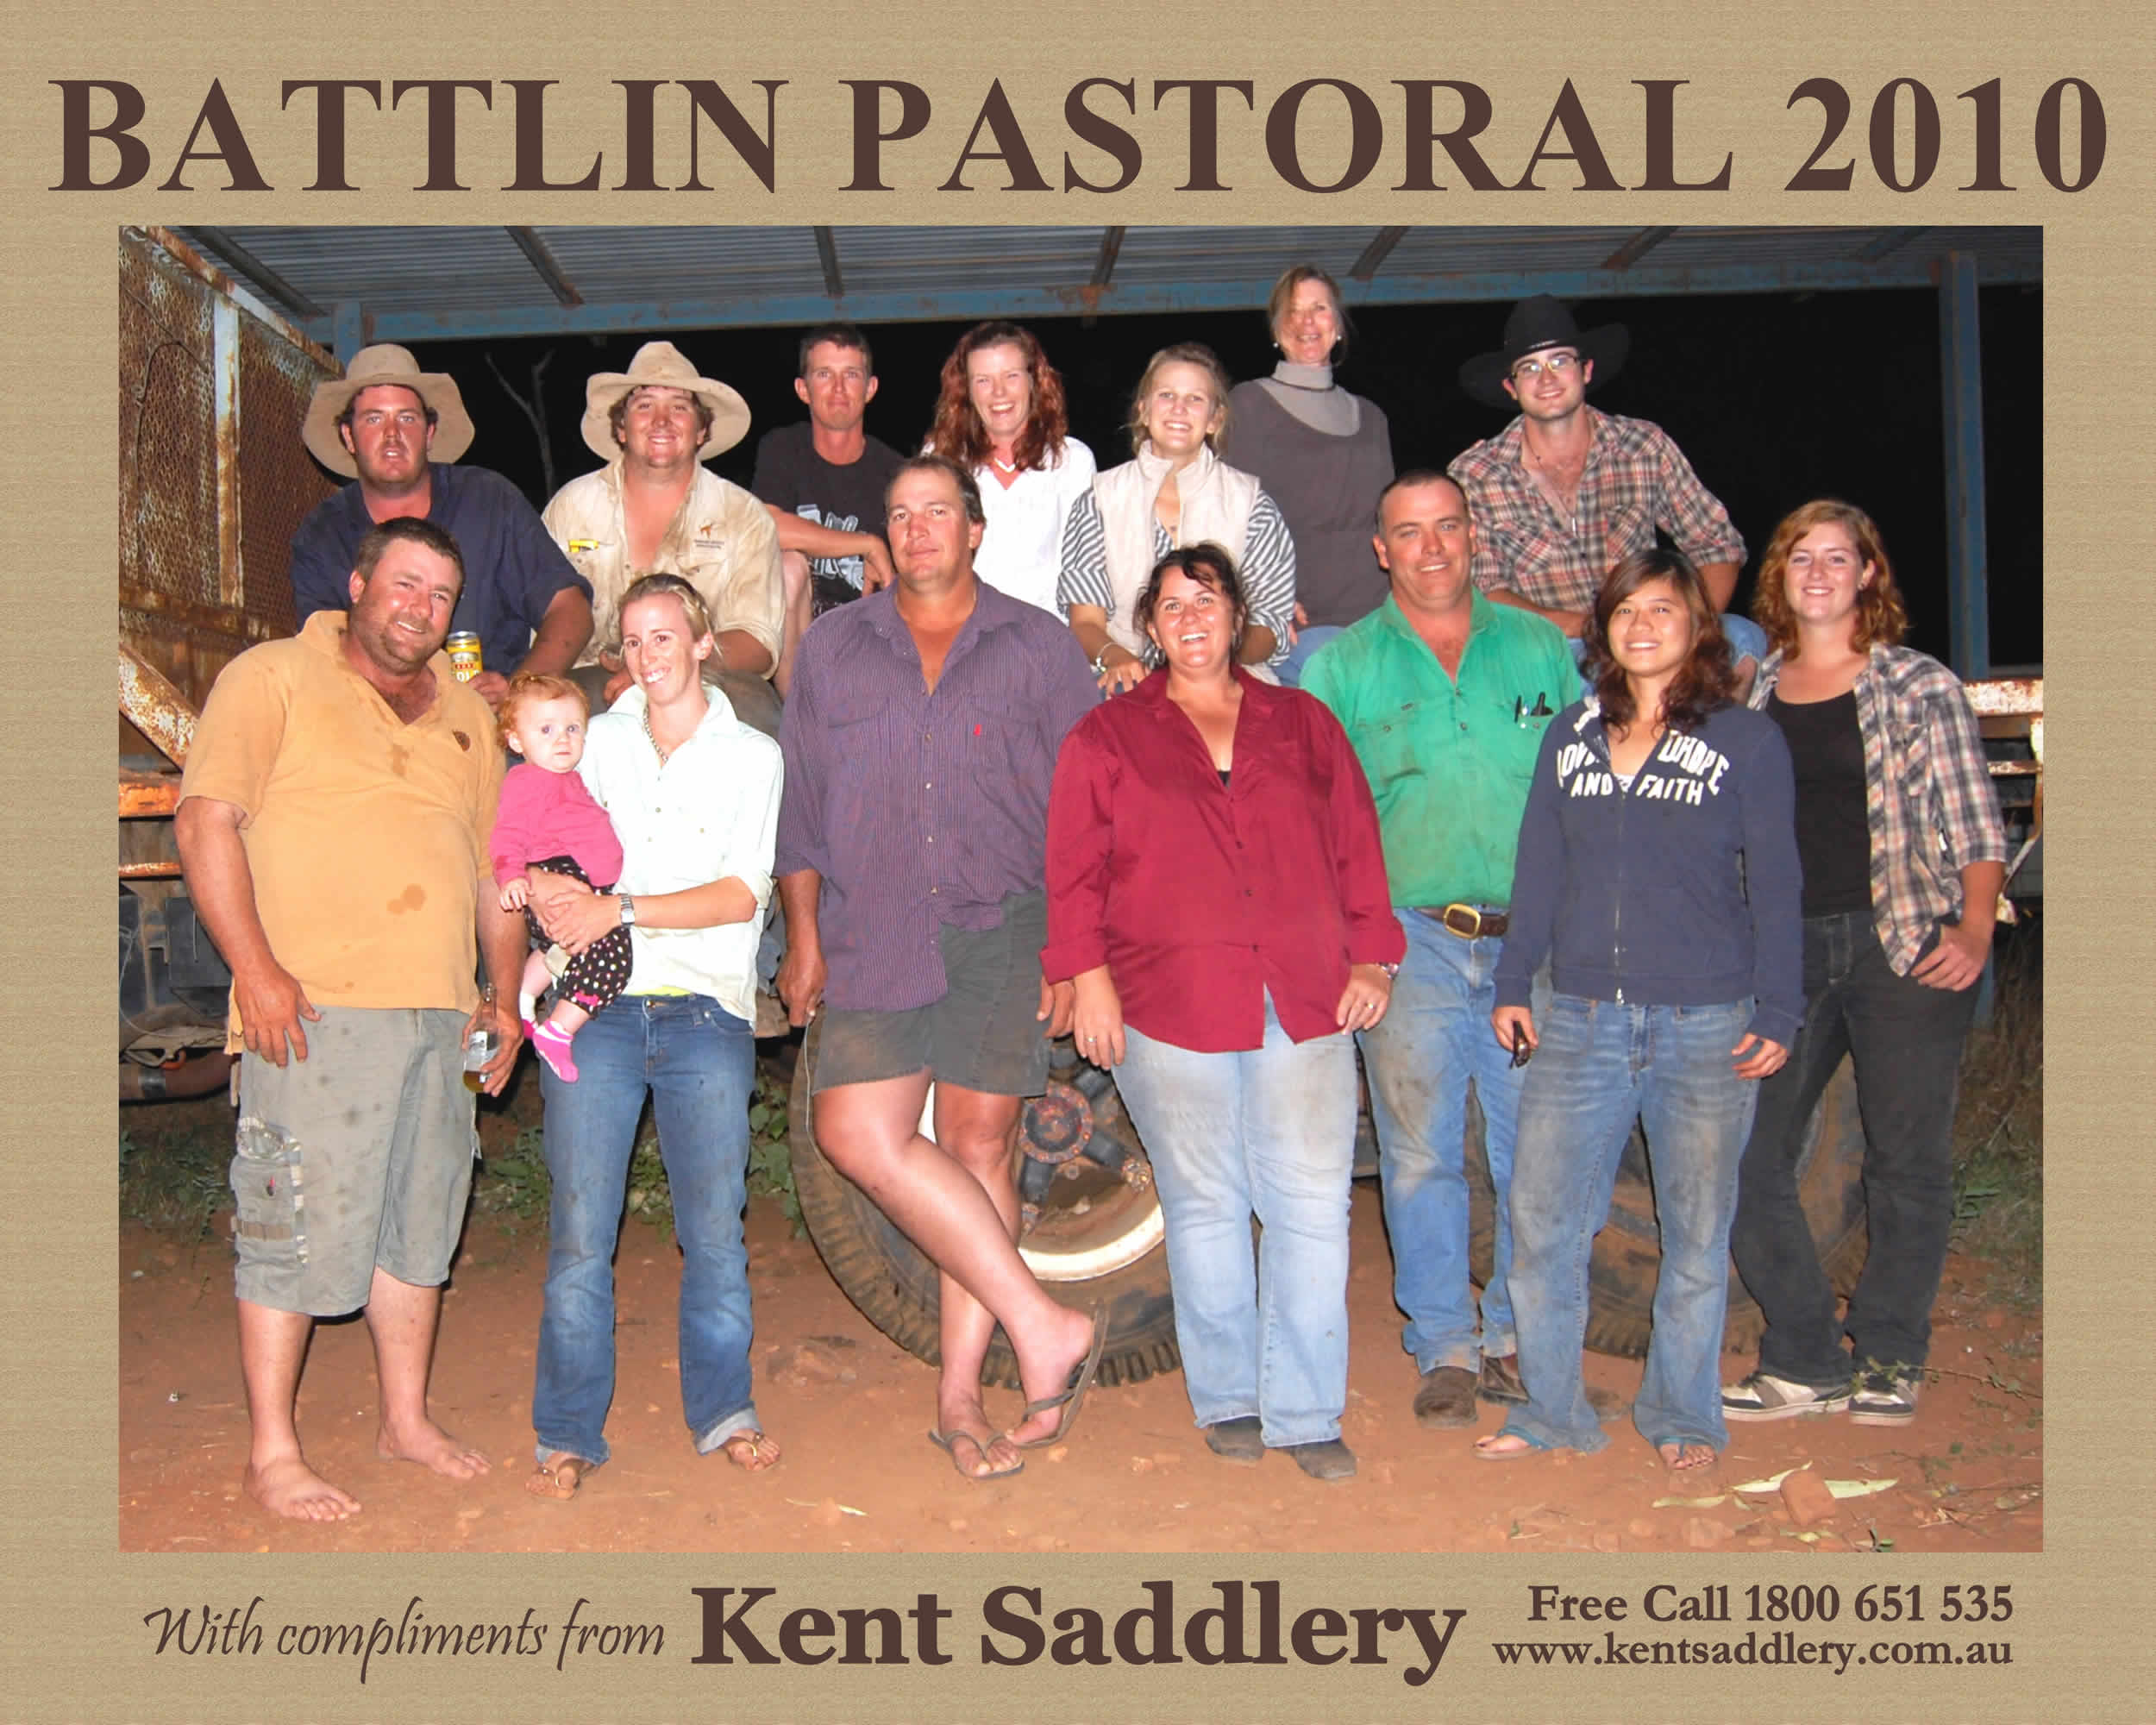 Northern Territory - Battlin Pastoral 17